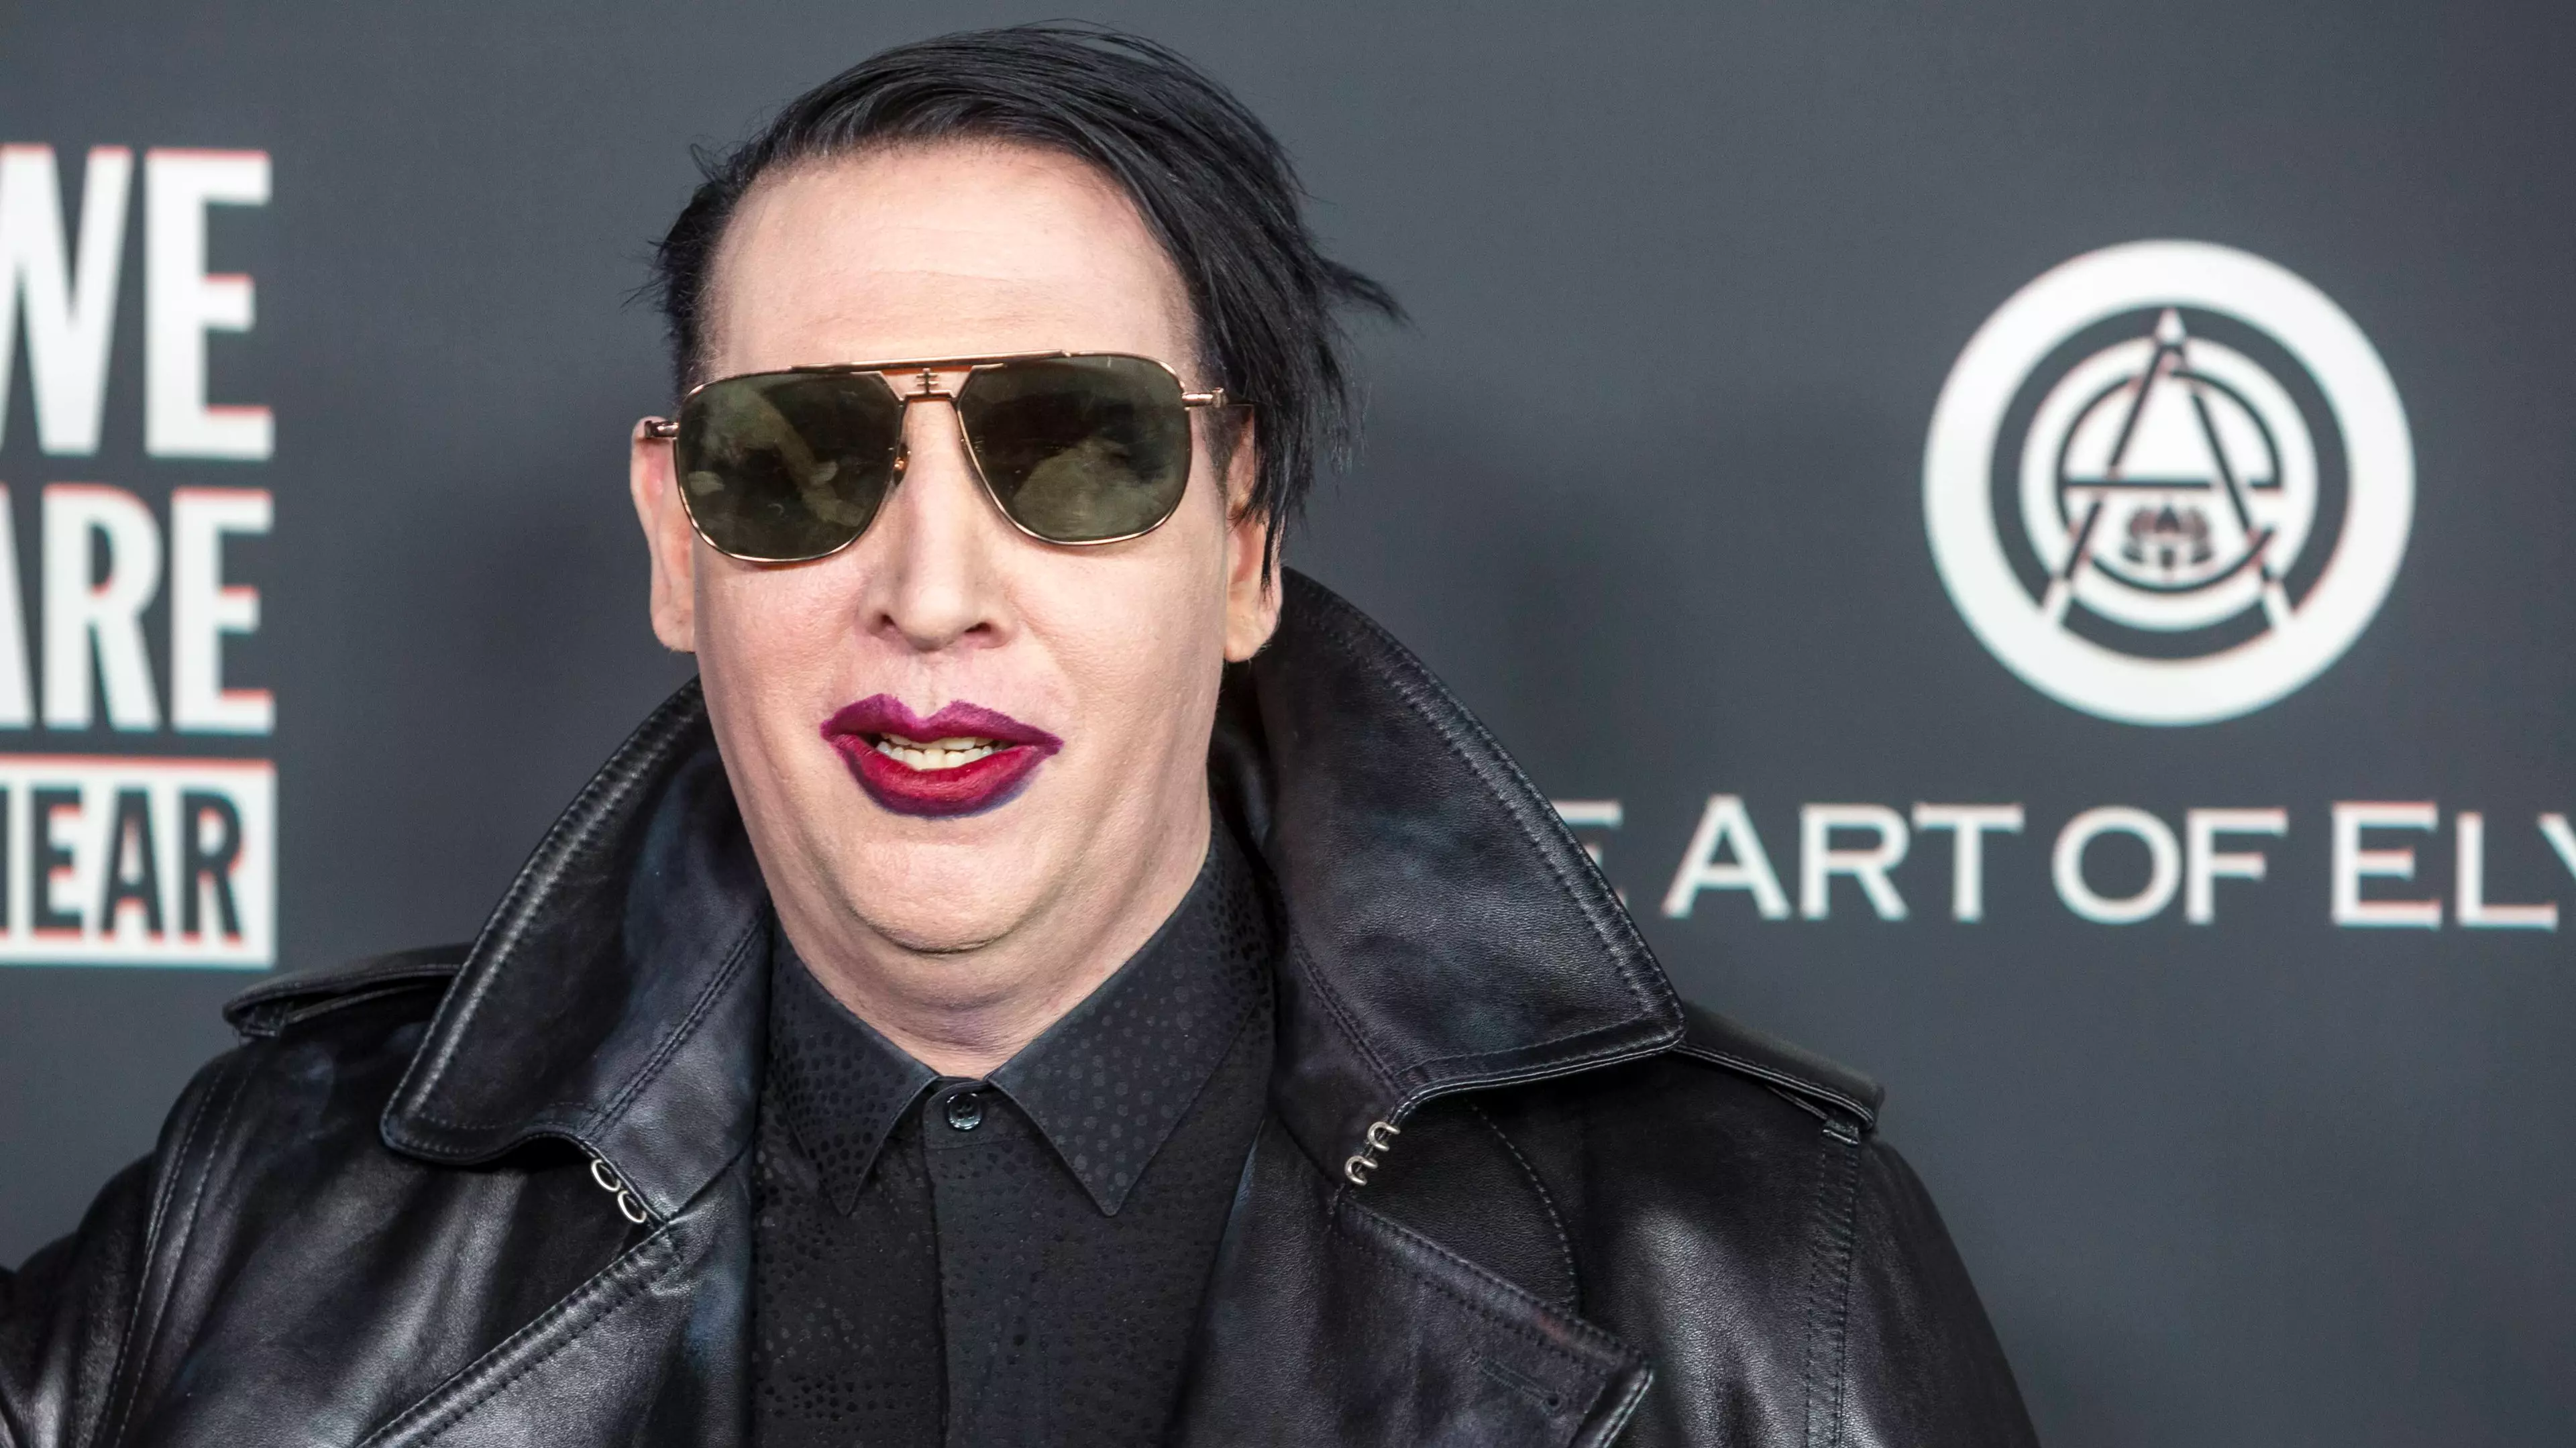 Marilyn Manson To Turn Himself In To Police Following Arrest Warrant